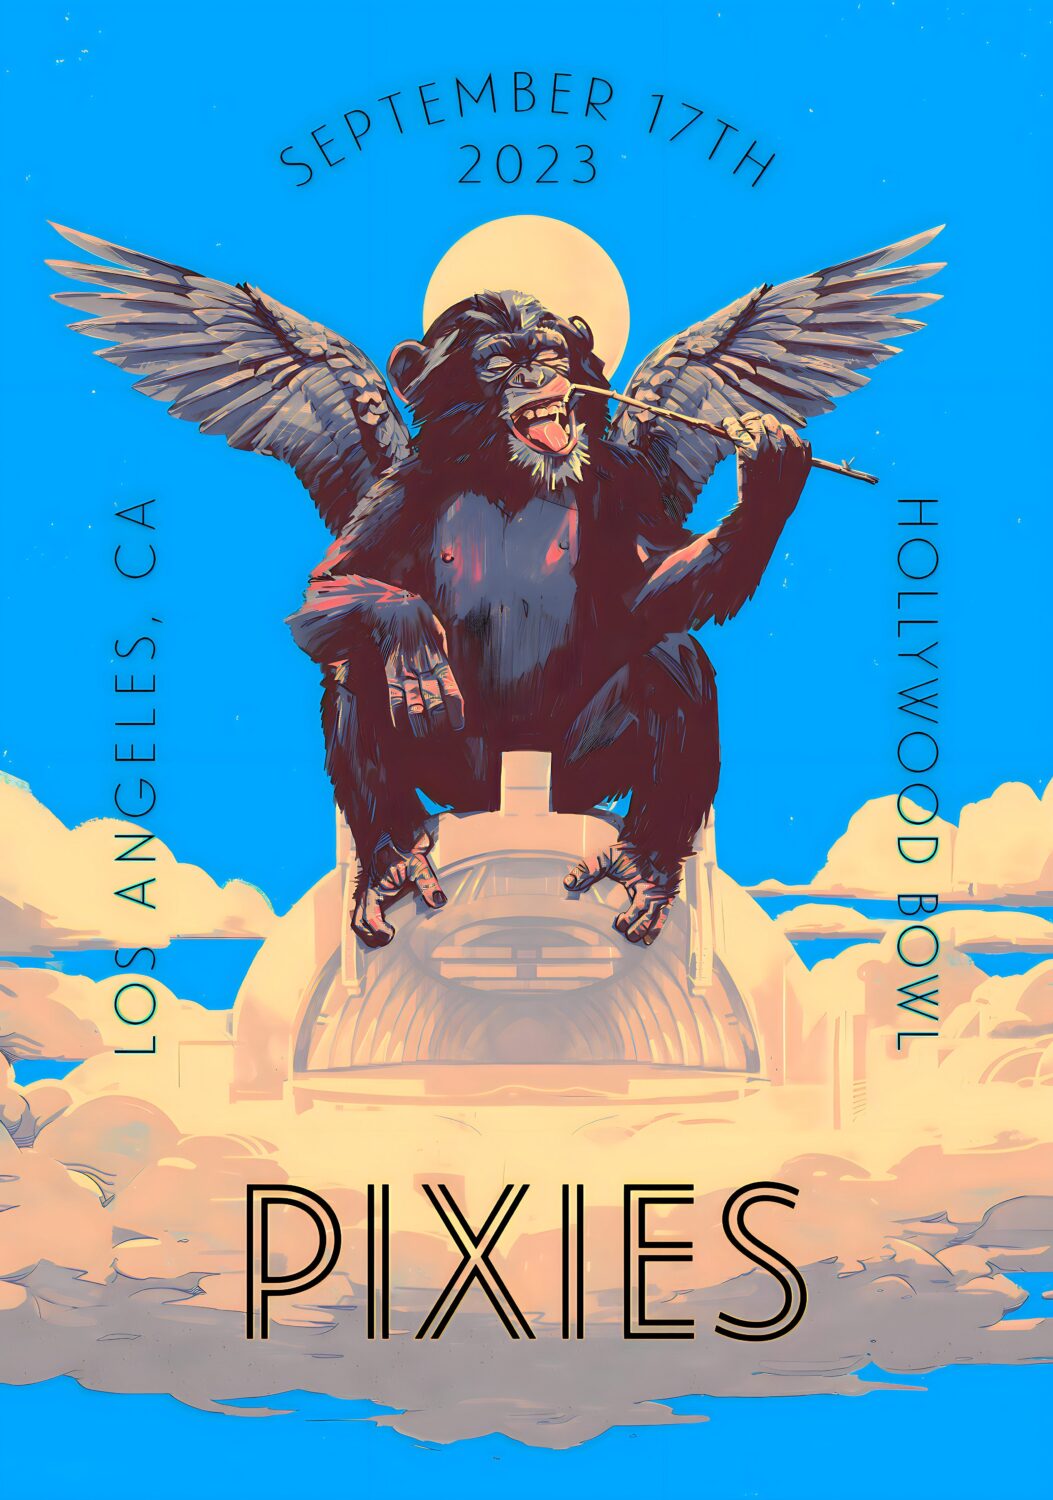 pixies reunion tour